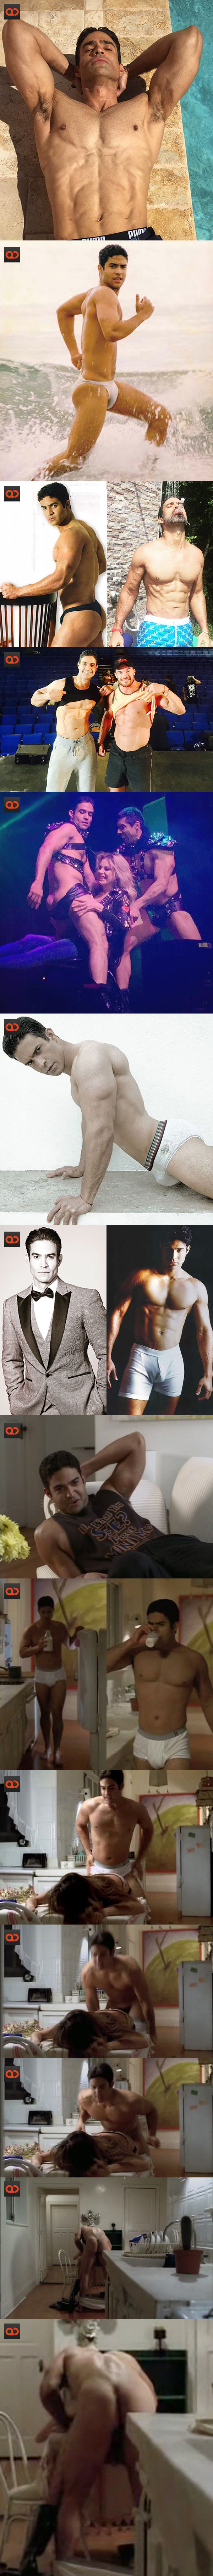 Juan Vidal, Mexican Actor From Telenovela “Vino El Amor”, Caught Sexting And Sending His Nudes!